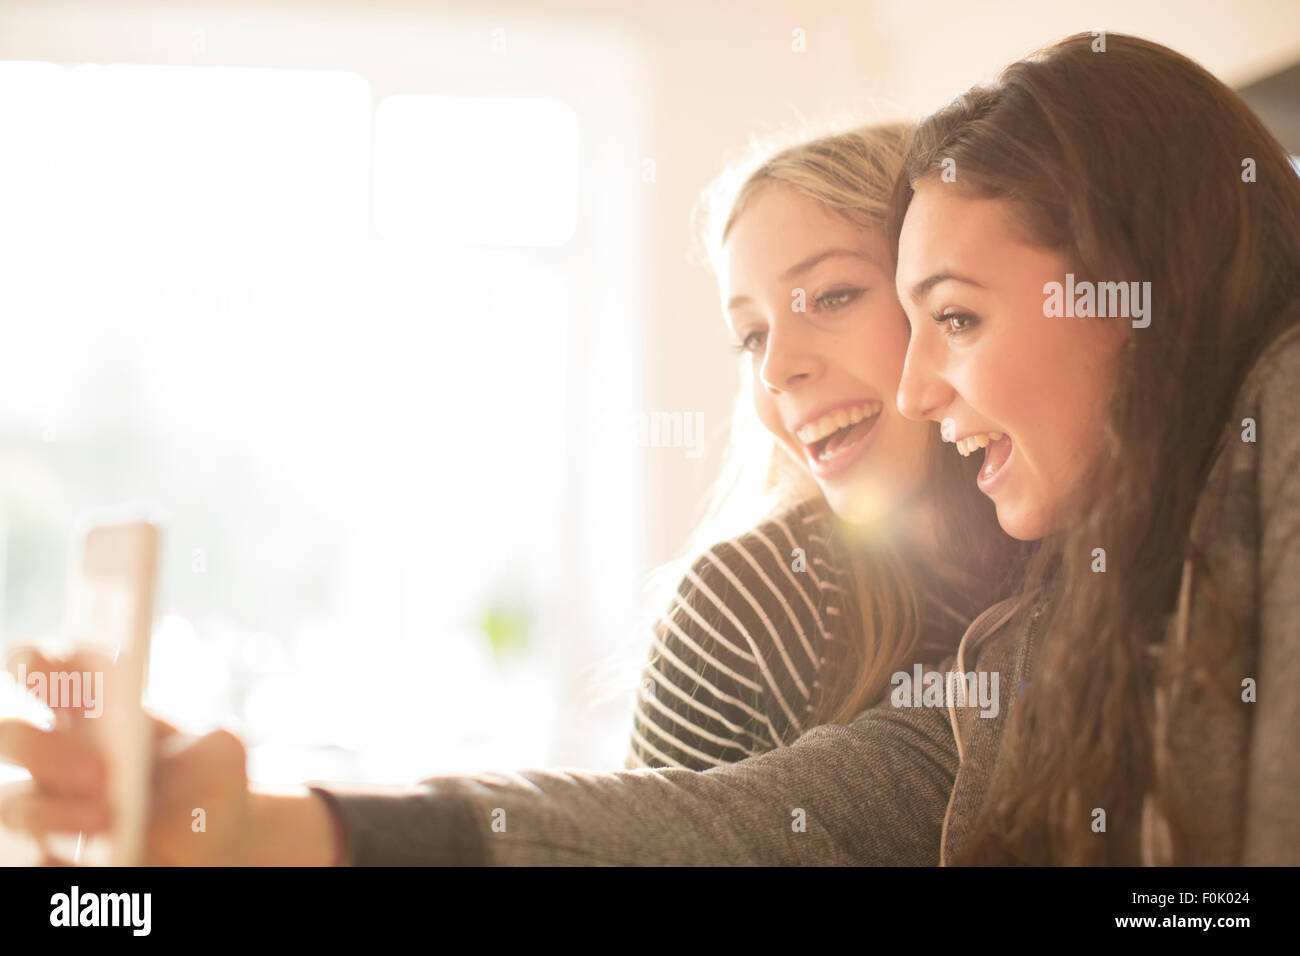 Teenage girls taking selfie with camera phone Stock Photo